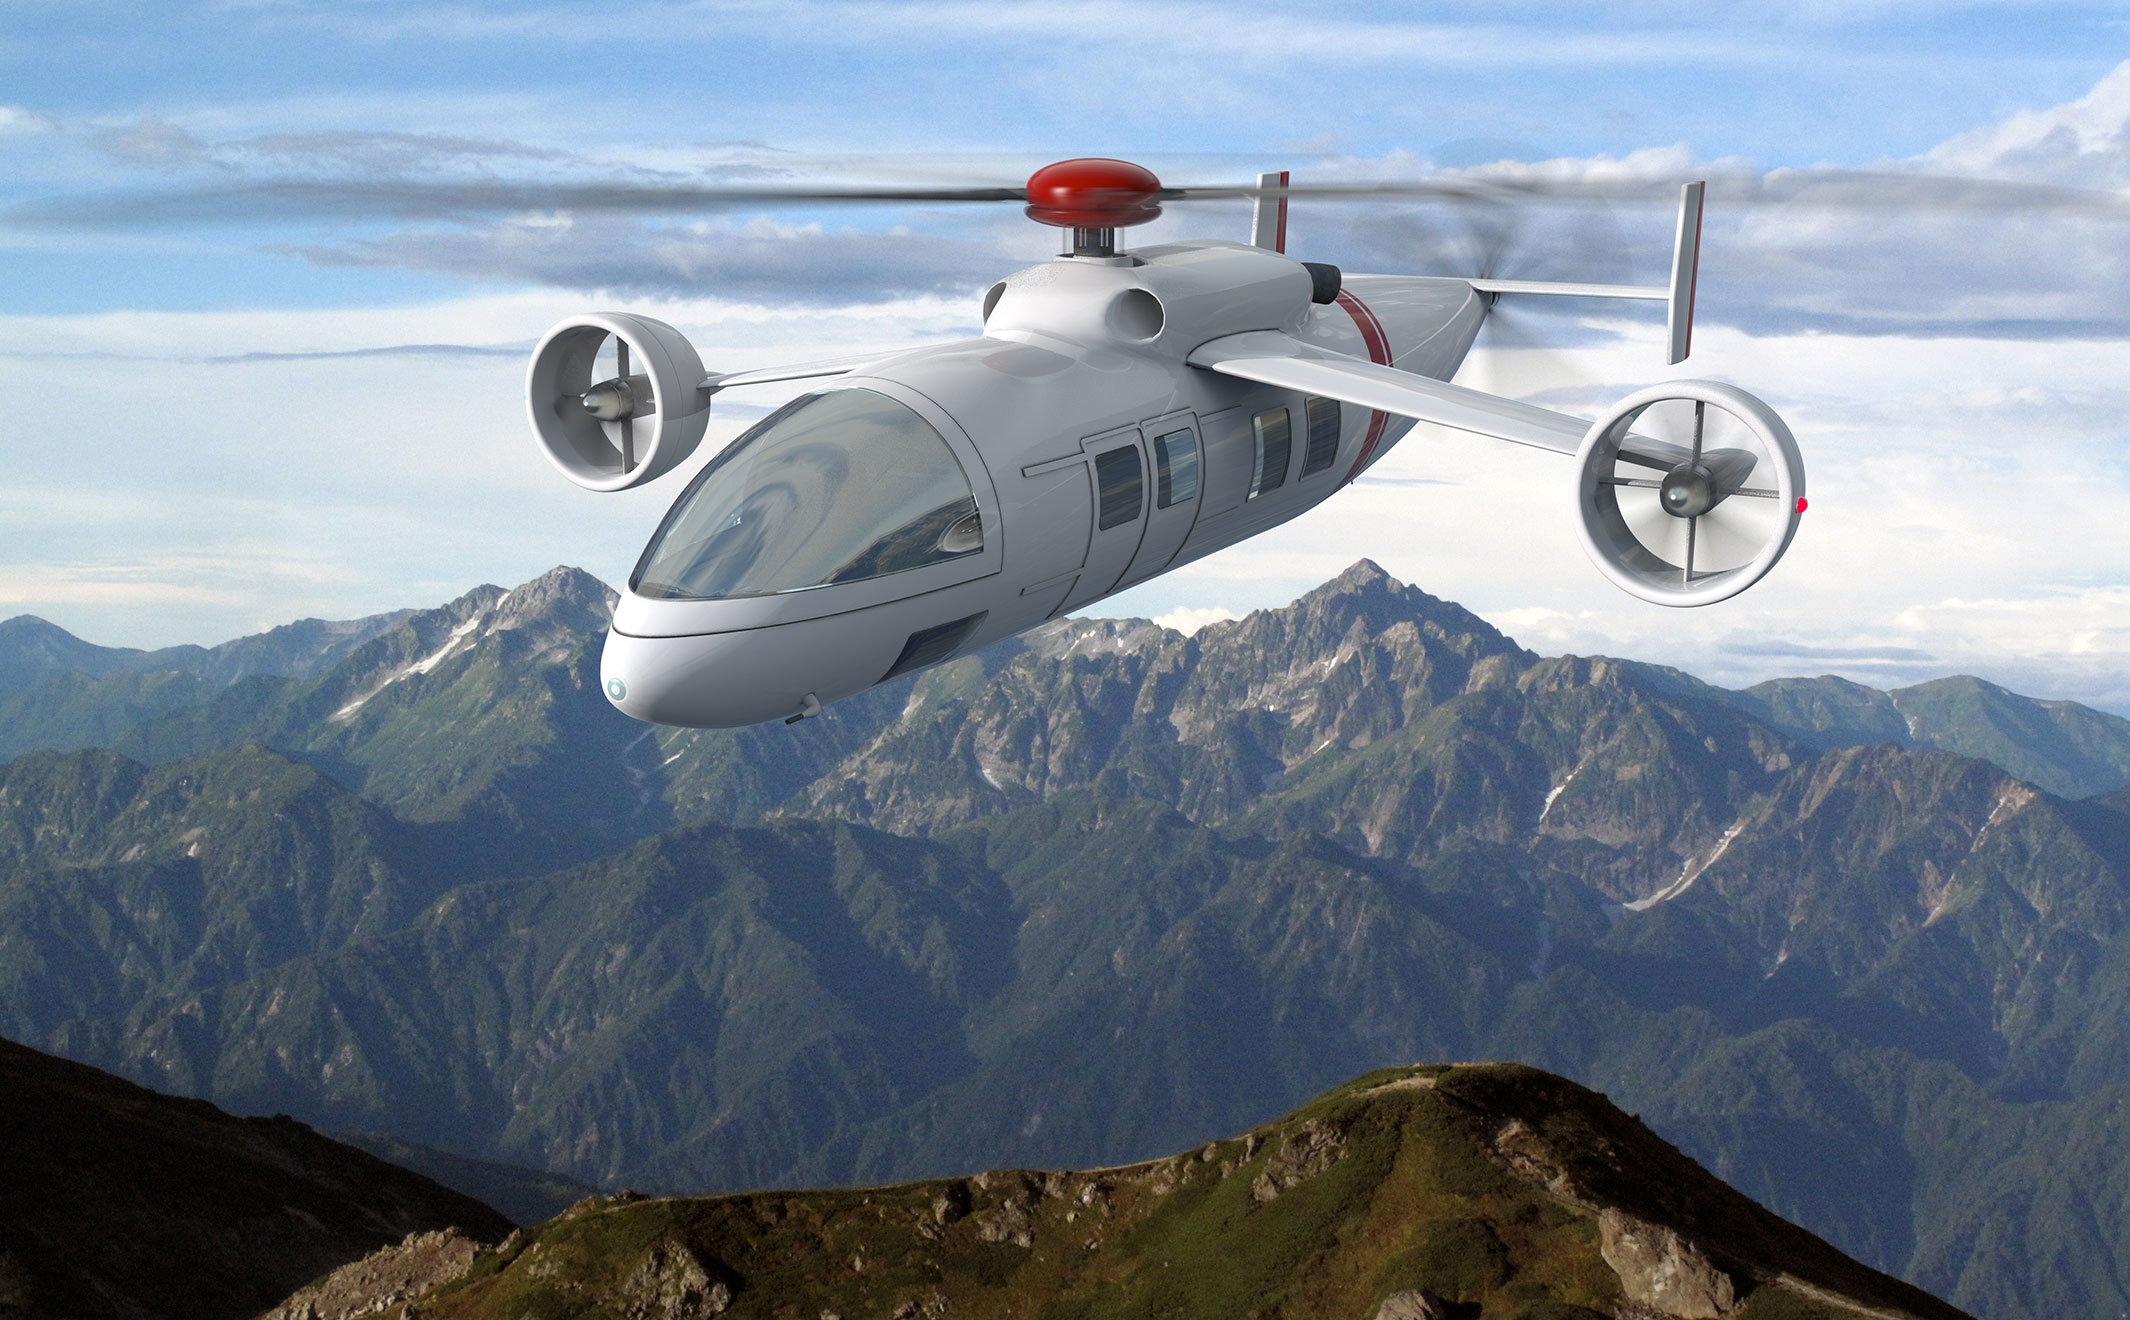 High-speed rotary aircraft technology